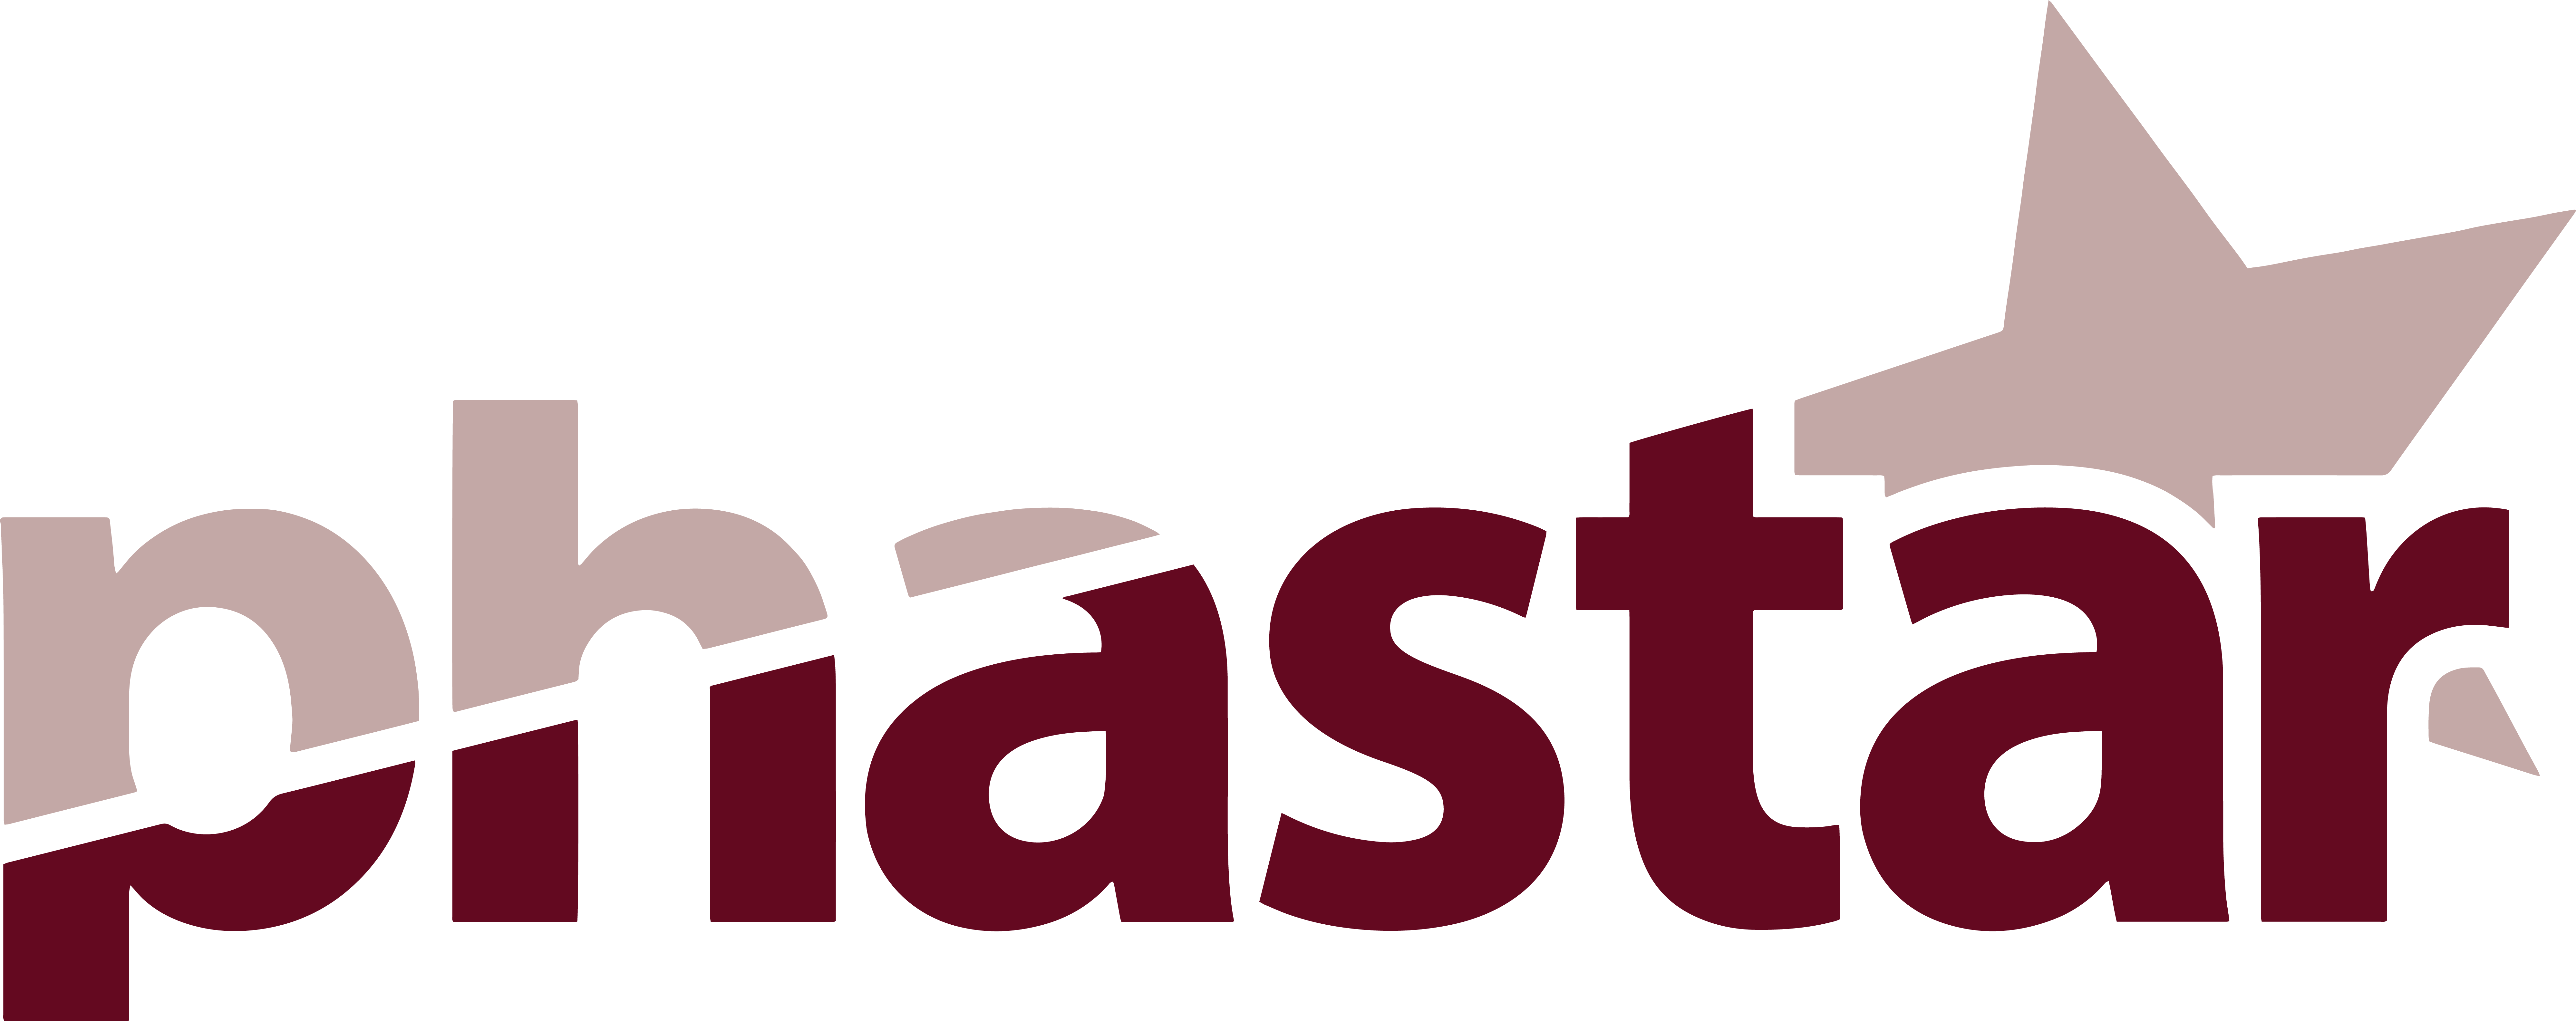 Phastar-logo-color high res